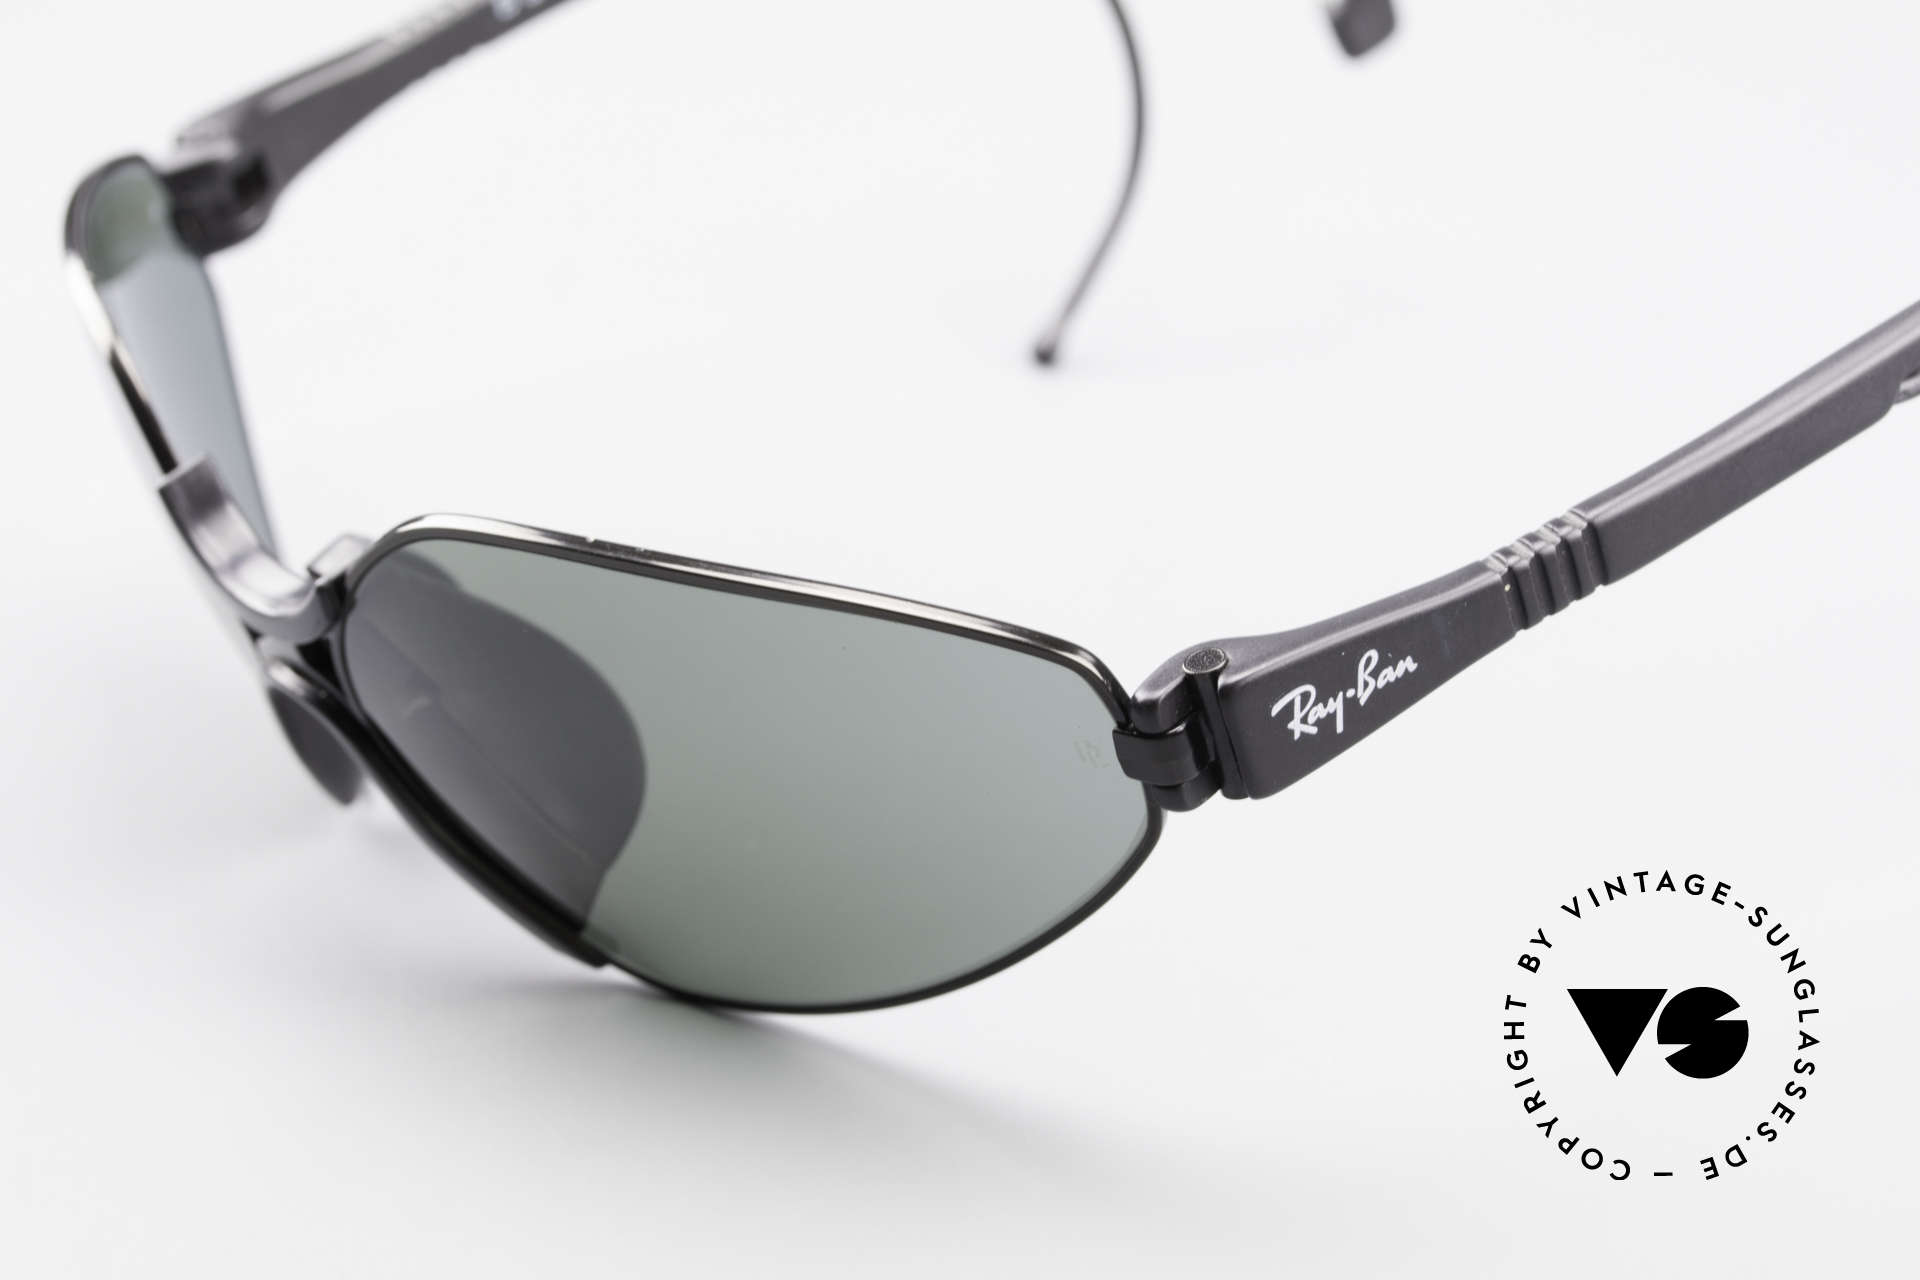 Sunglasses Ray Ban Sport Series 1 G20 Chromax B&L Sun Lenses